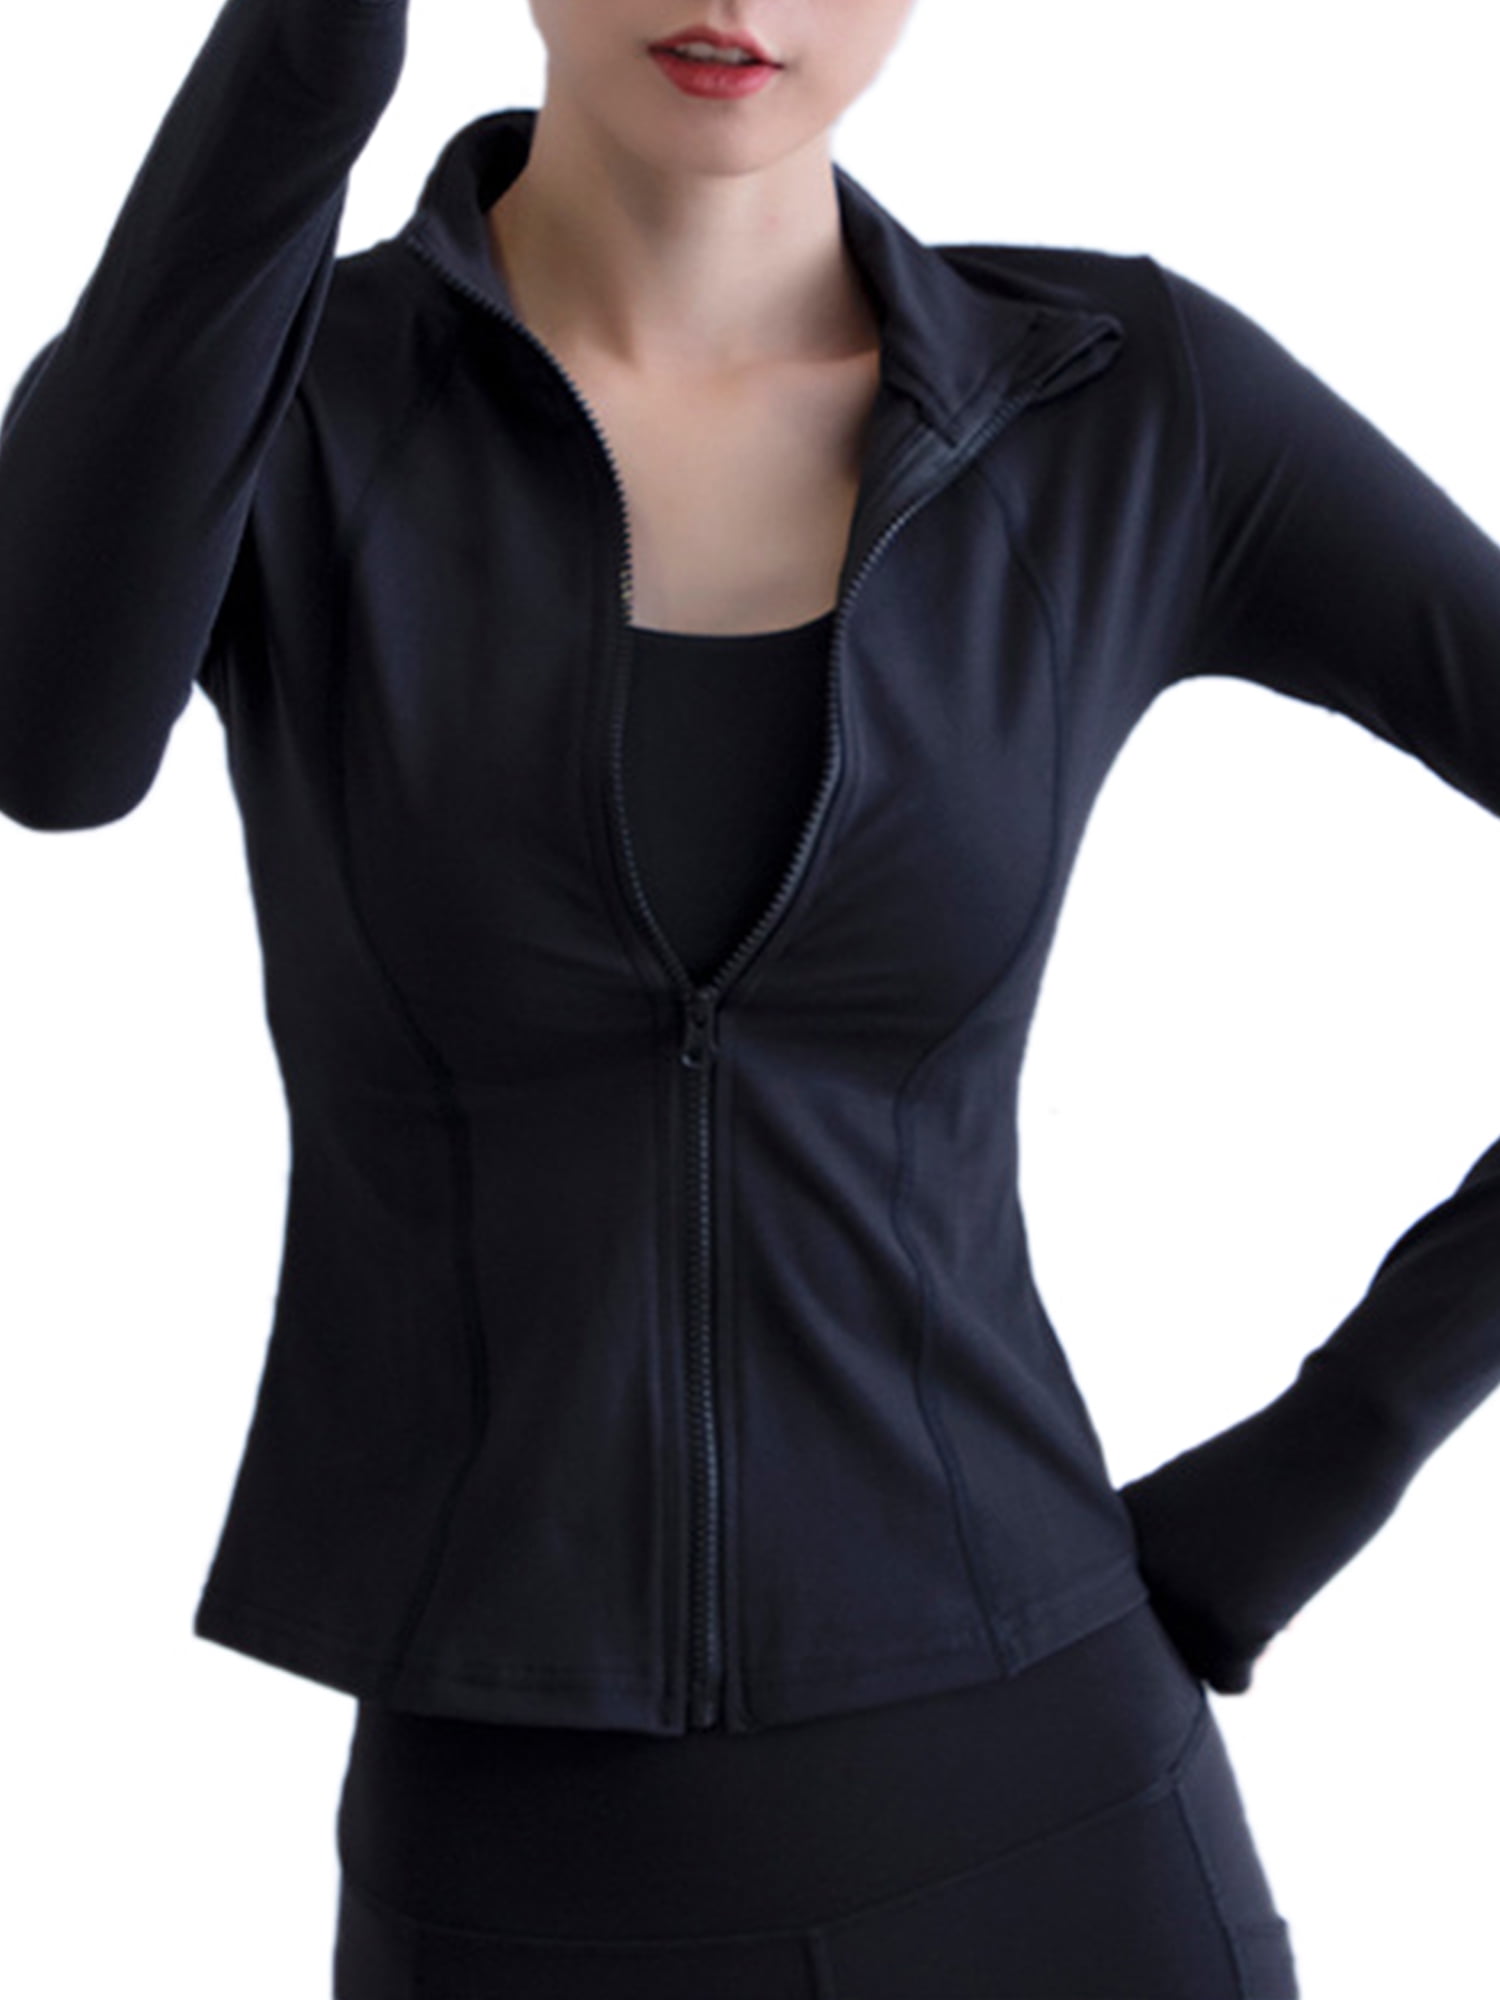 Details about   Womens Zip Fleece Pullover Long Sleeve Top Yoga Running Jogging Outdoors T-Shirt